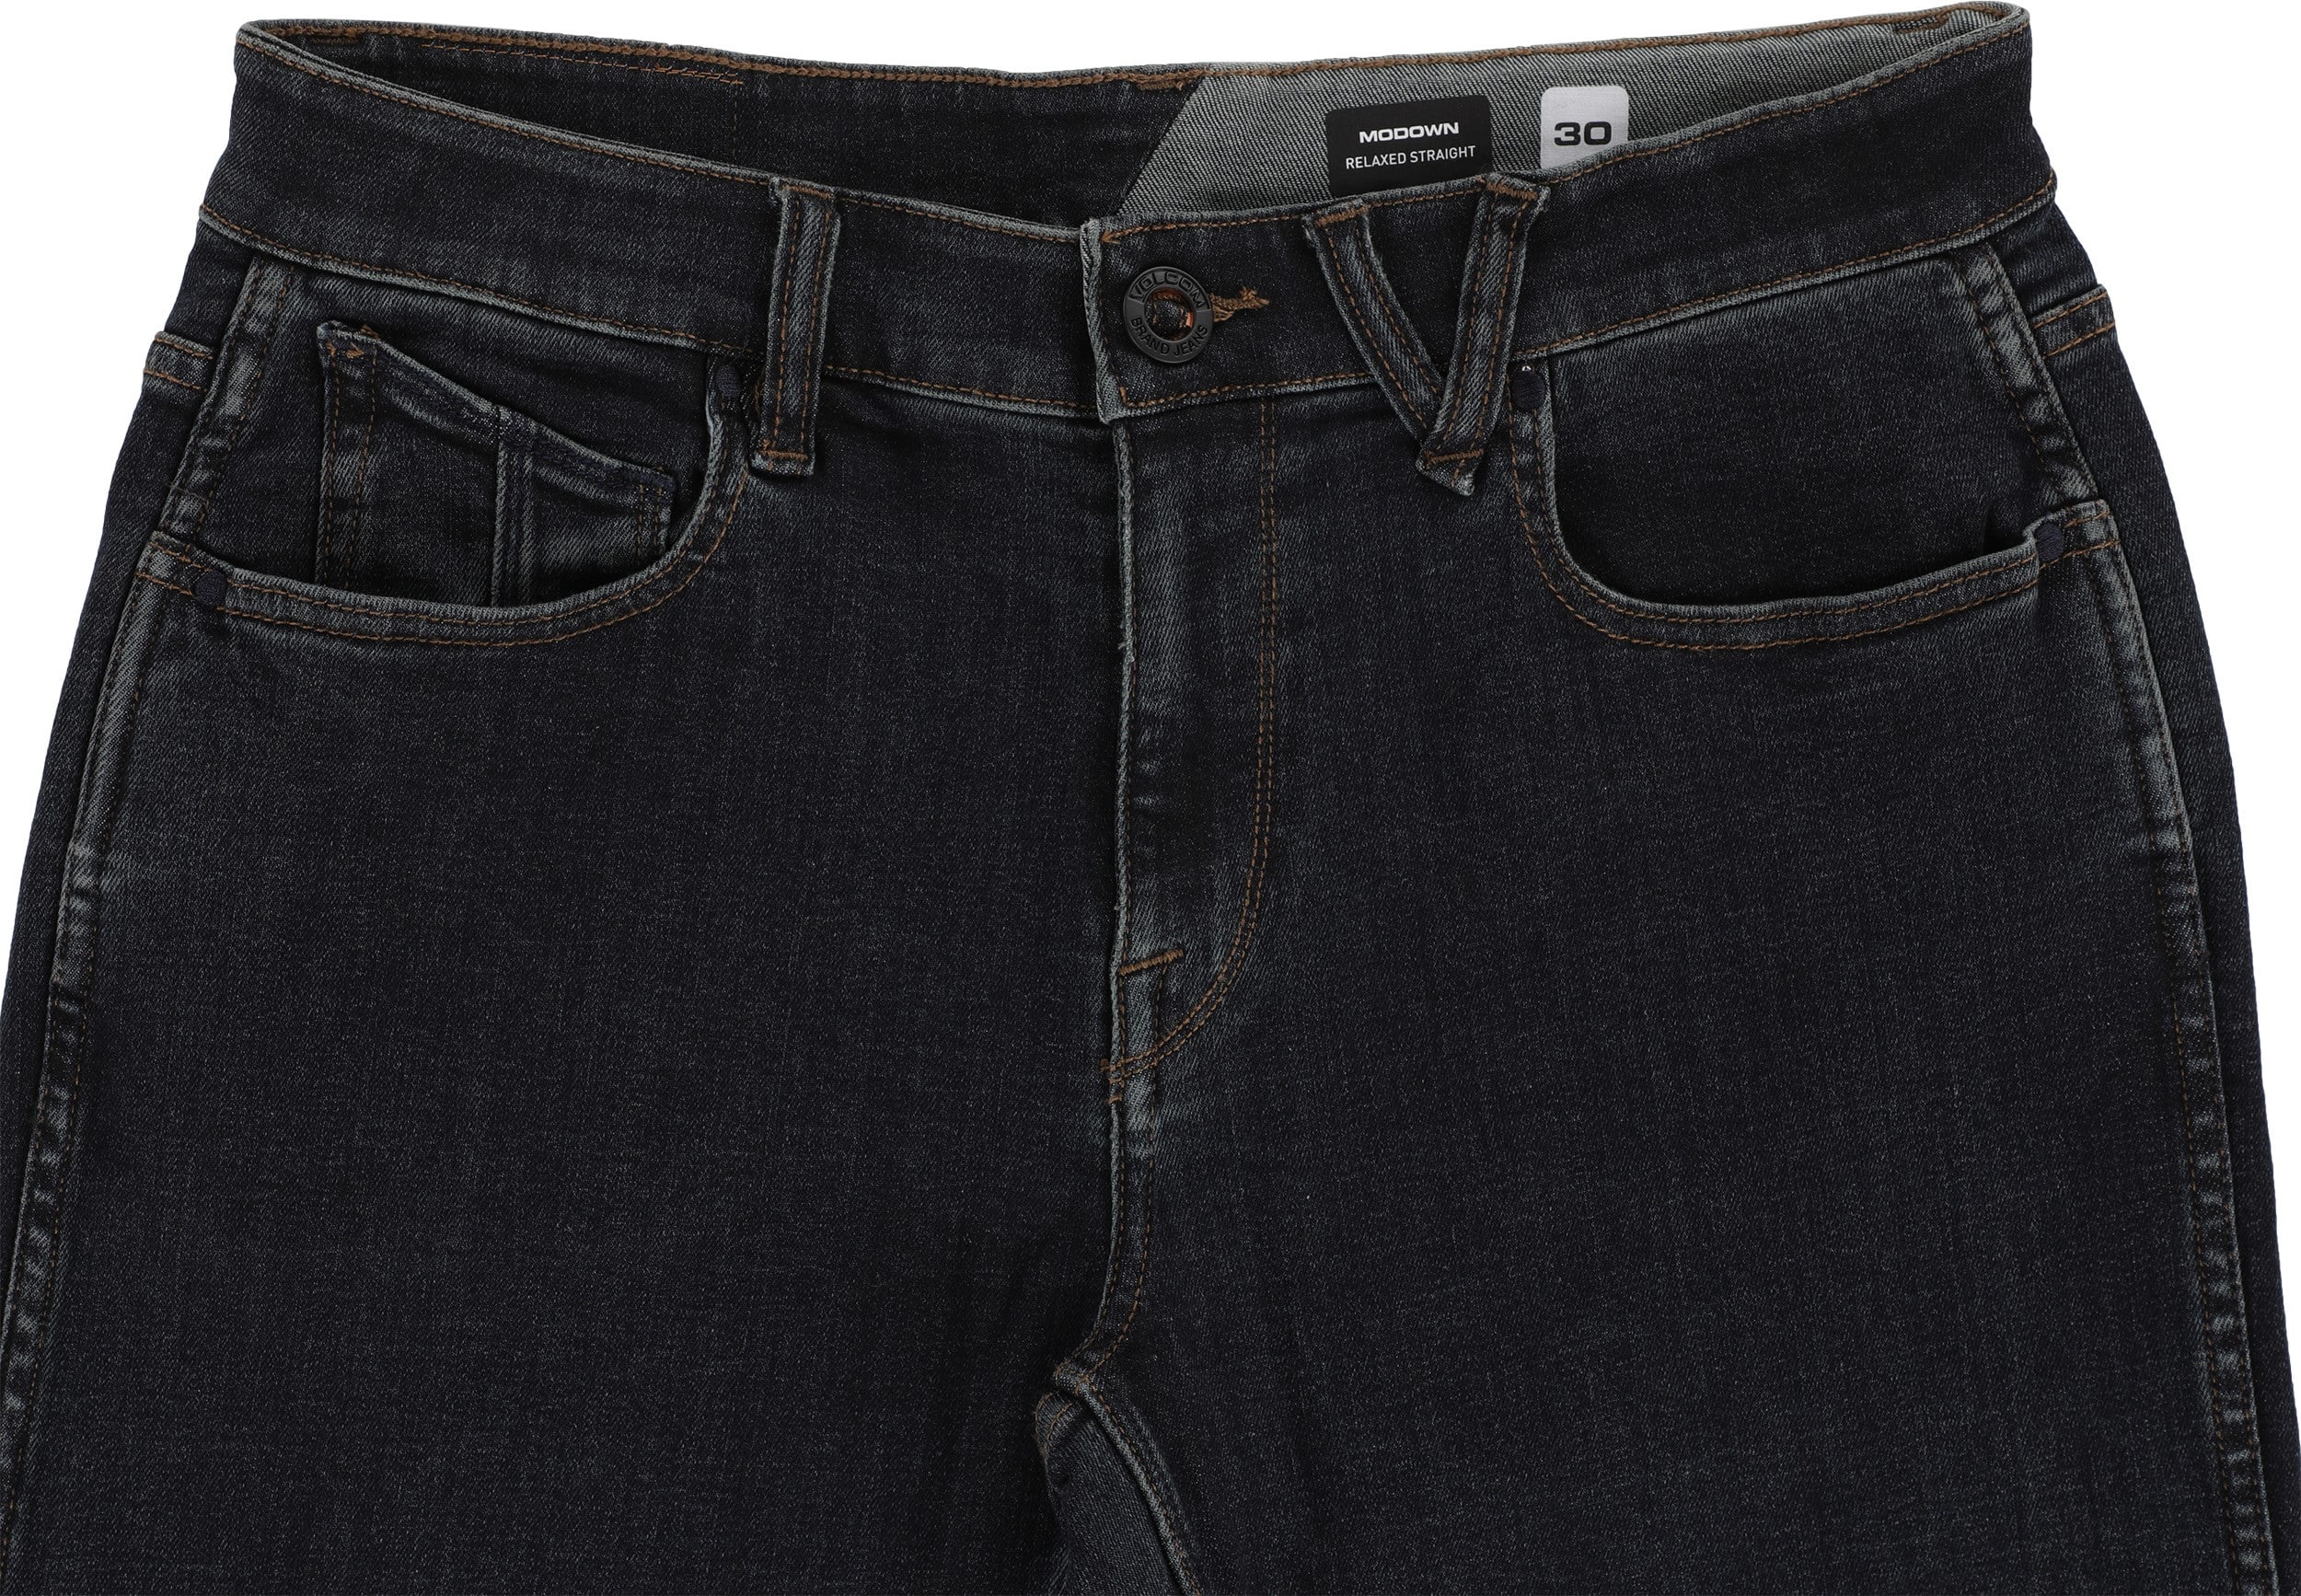 Volcom Modown Jeans - dark vintage indigo | Tactics